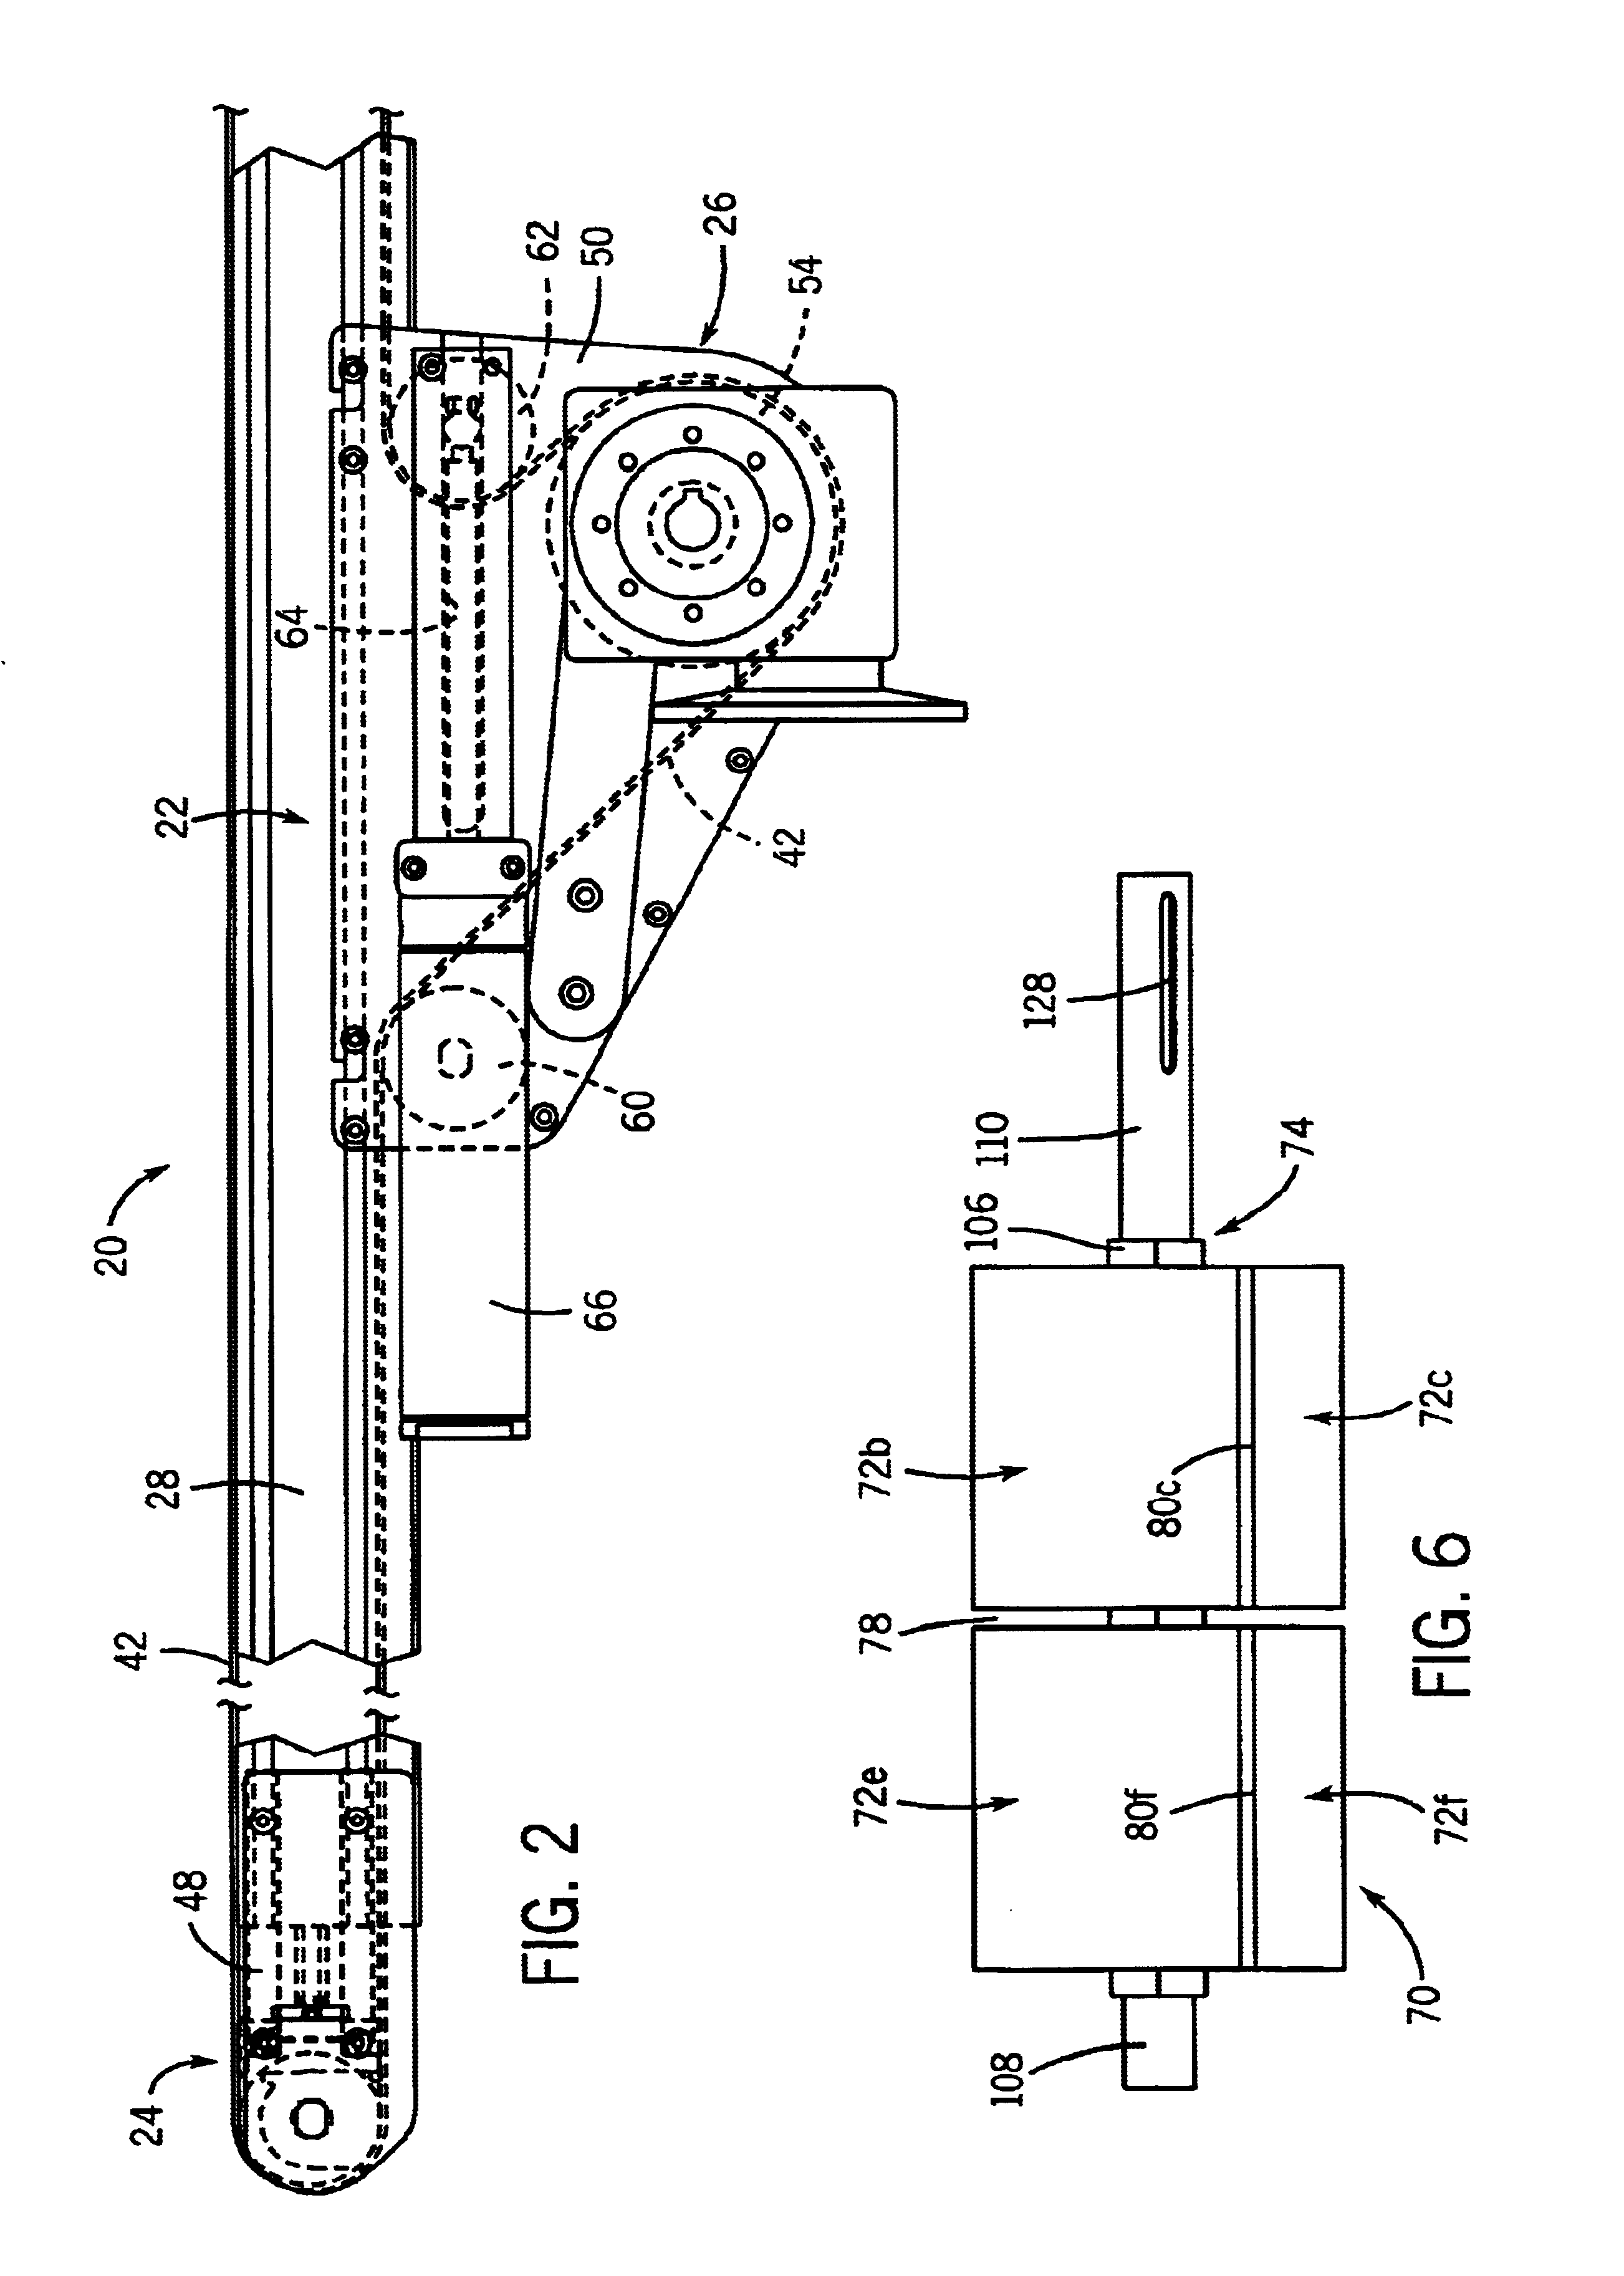 Multi-section conveyor drive roller